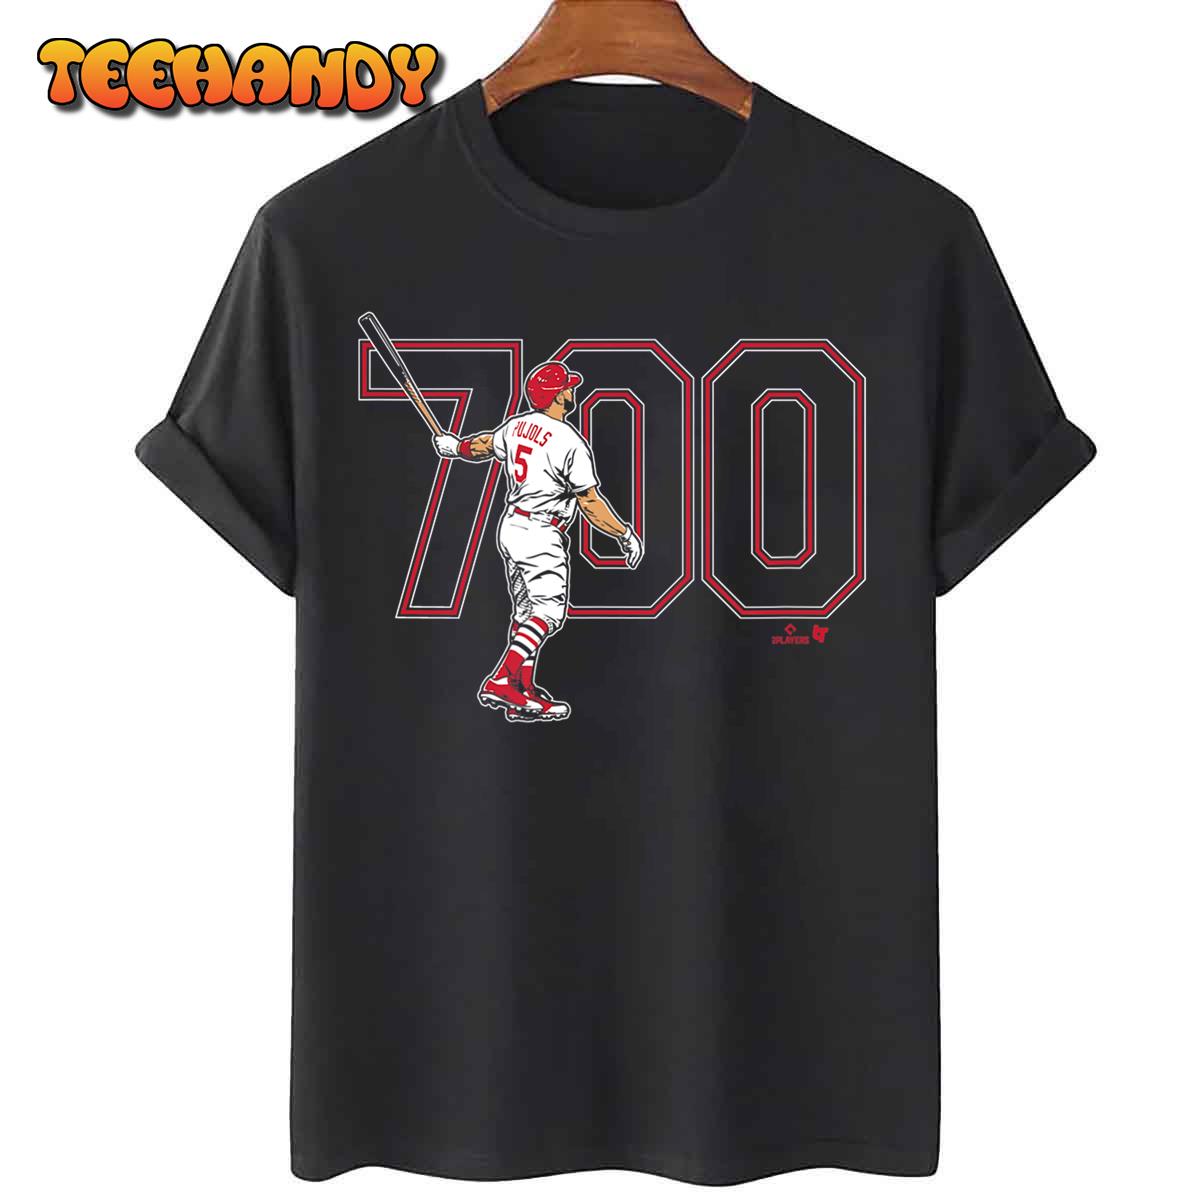 Albert Pujols – 700 Vol. 2 – St. Louis Baseball T-Shirt